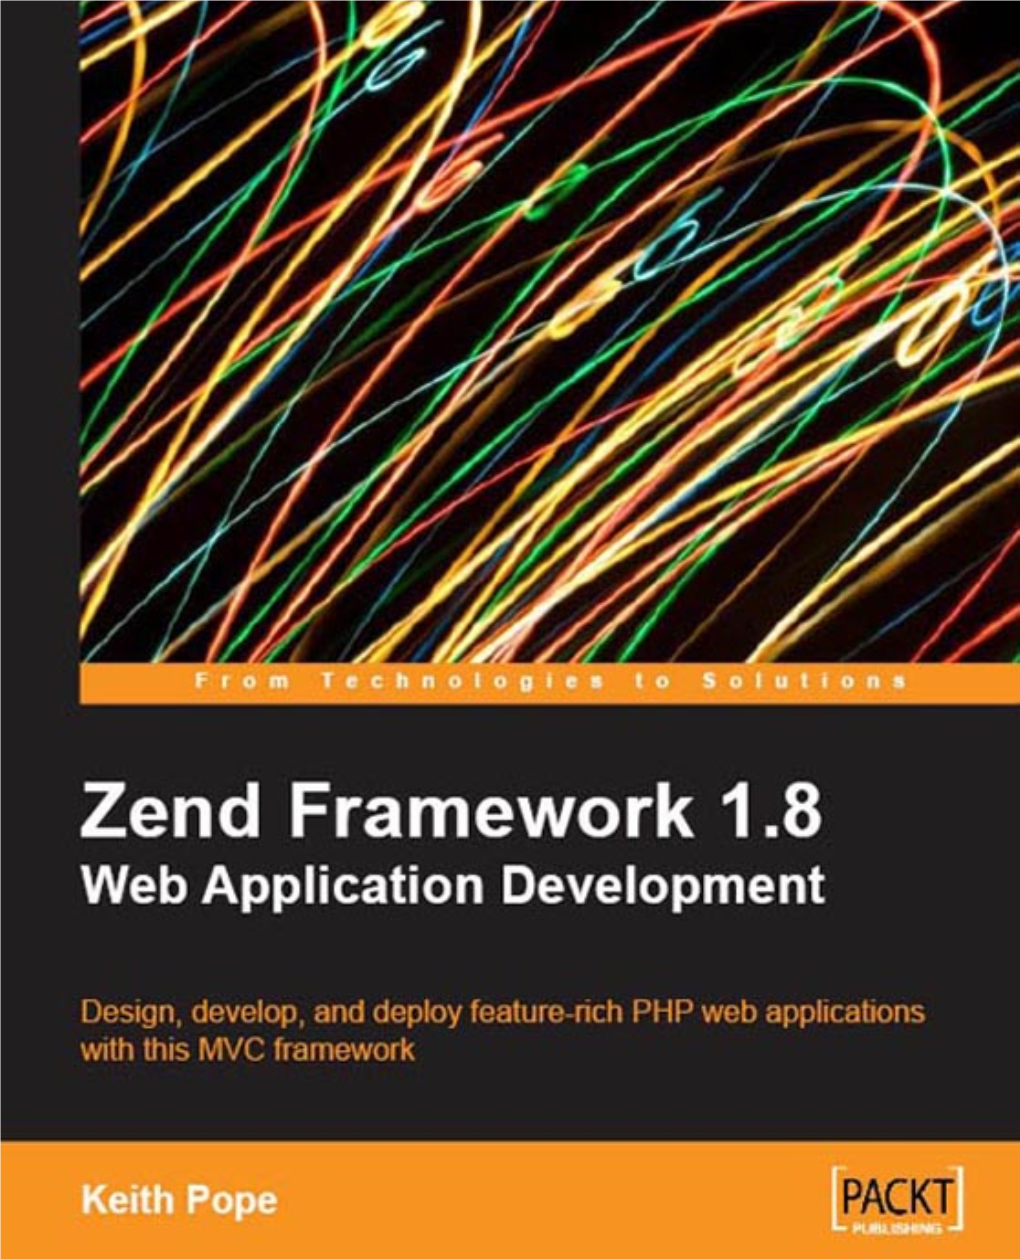 Models in the Zend Framework